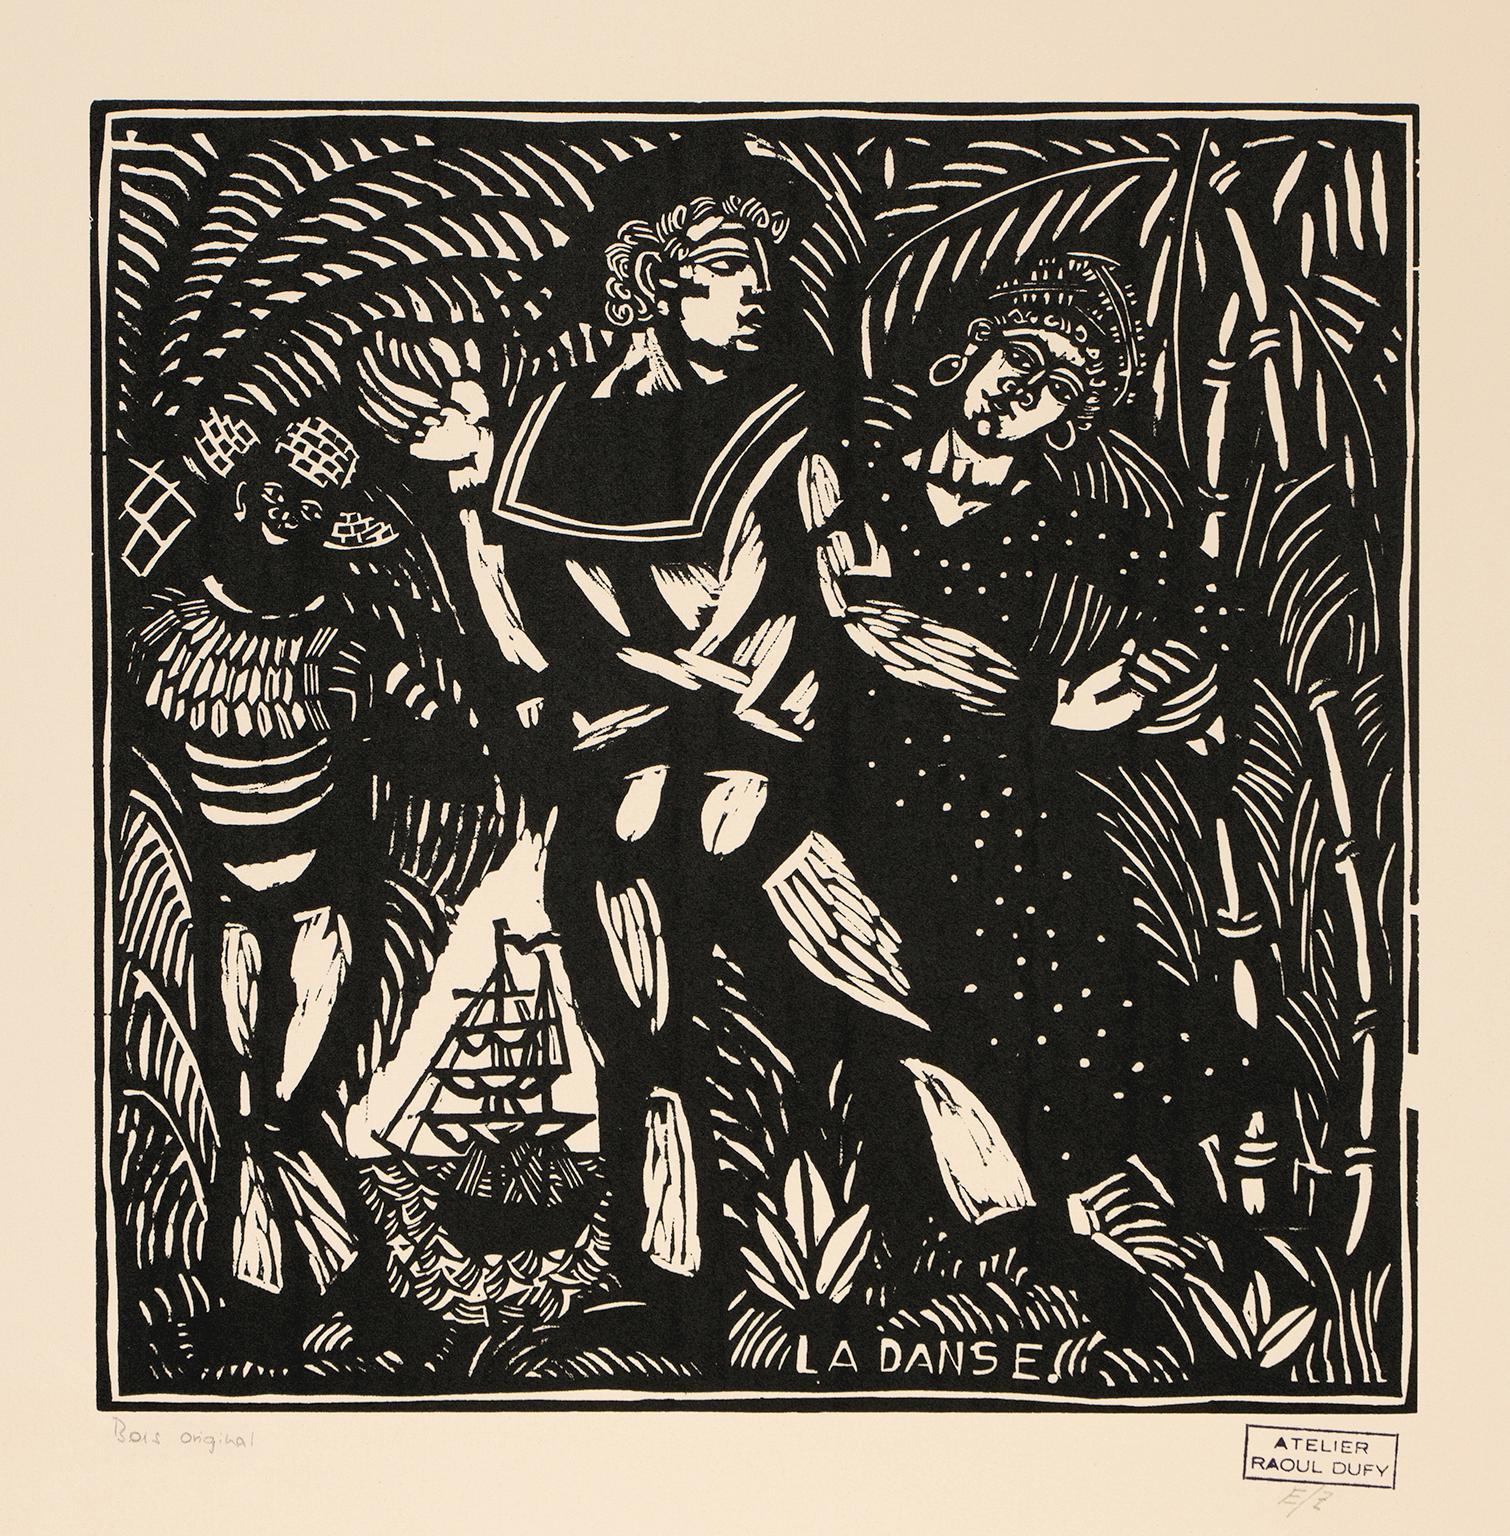 Raoul Dufy Figurative Print – La Danse" (Tanz) - französischer kubistischer Holzschnitt